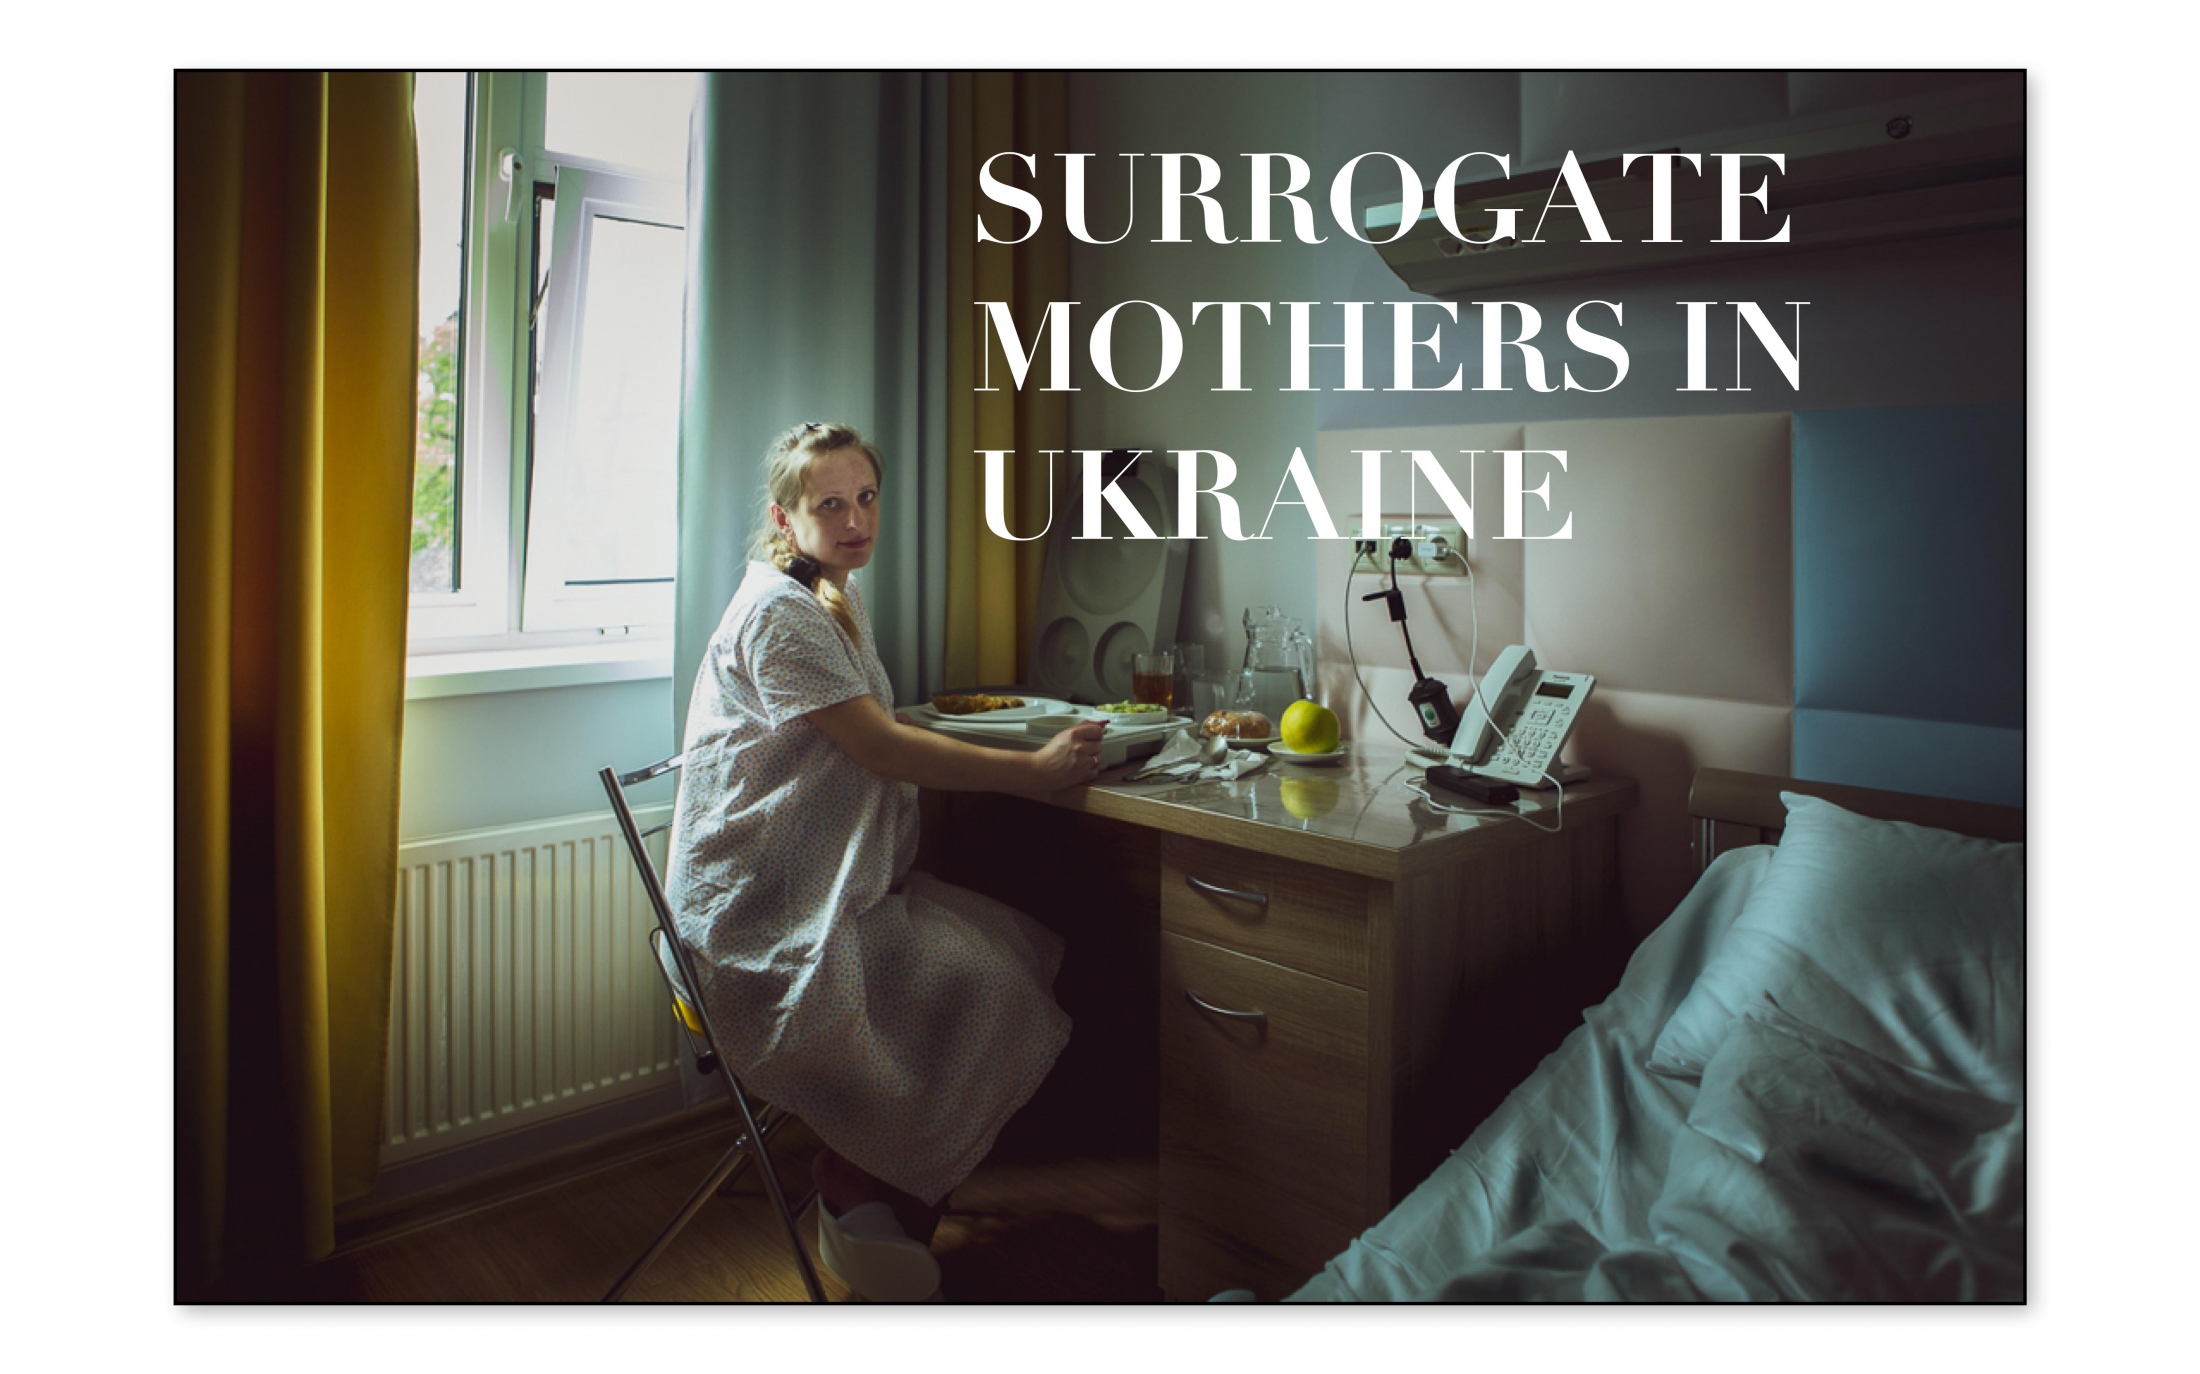 KIEV - Surrogacy buisness - 